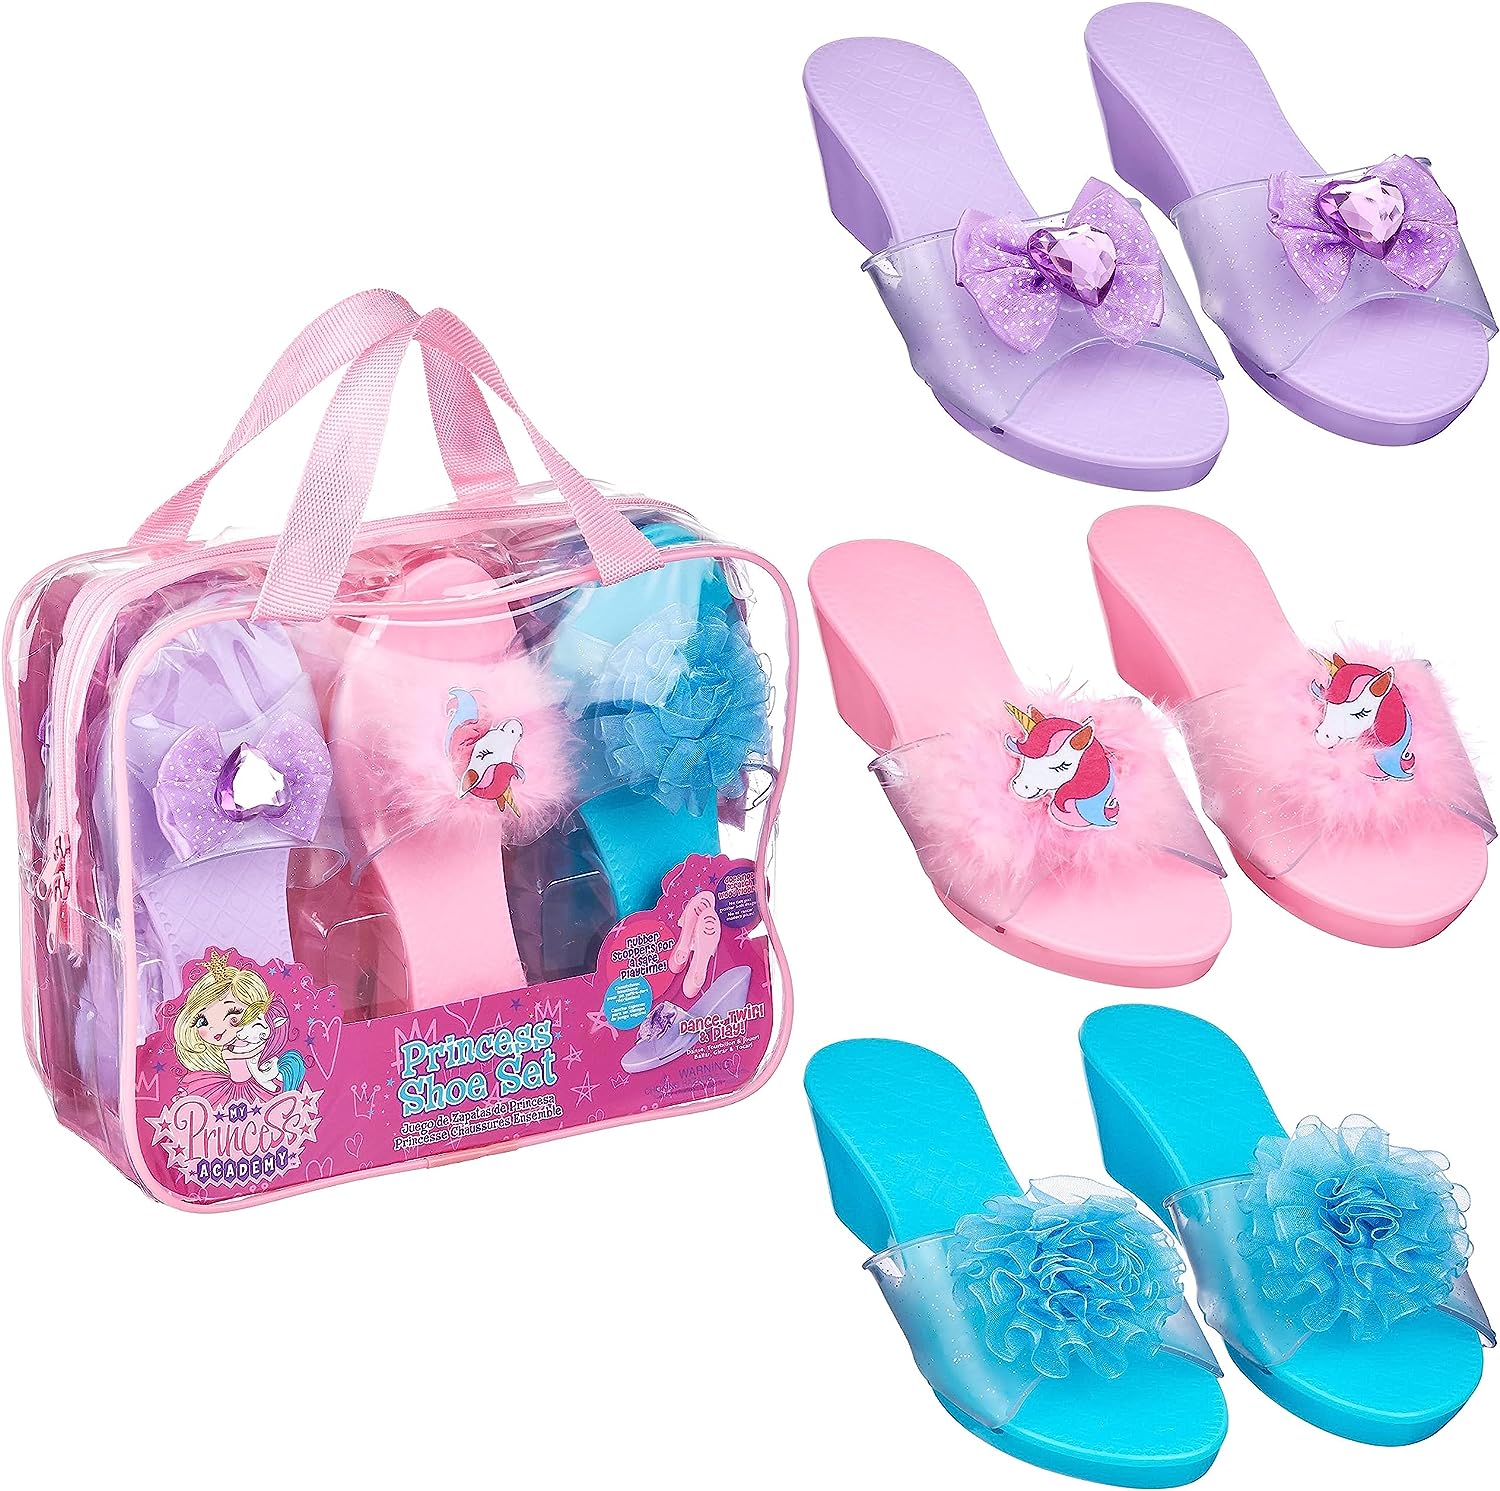 Expressions 3-Pack Princess Shoes Set - Dress Up [...]